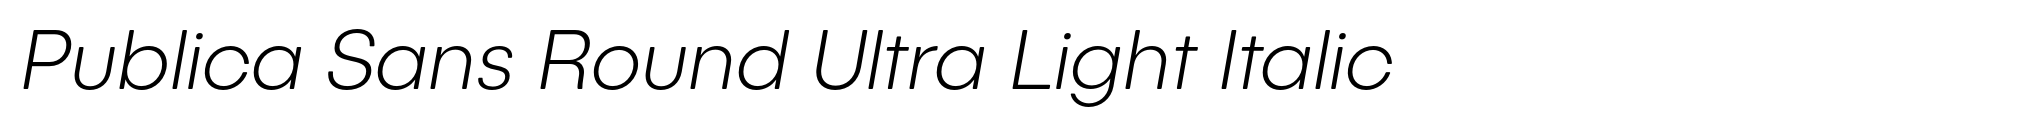 Publica Sans Round Ultra Light Italic image